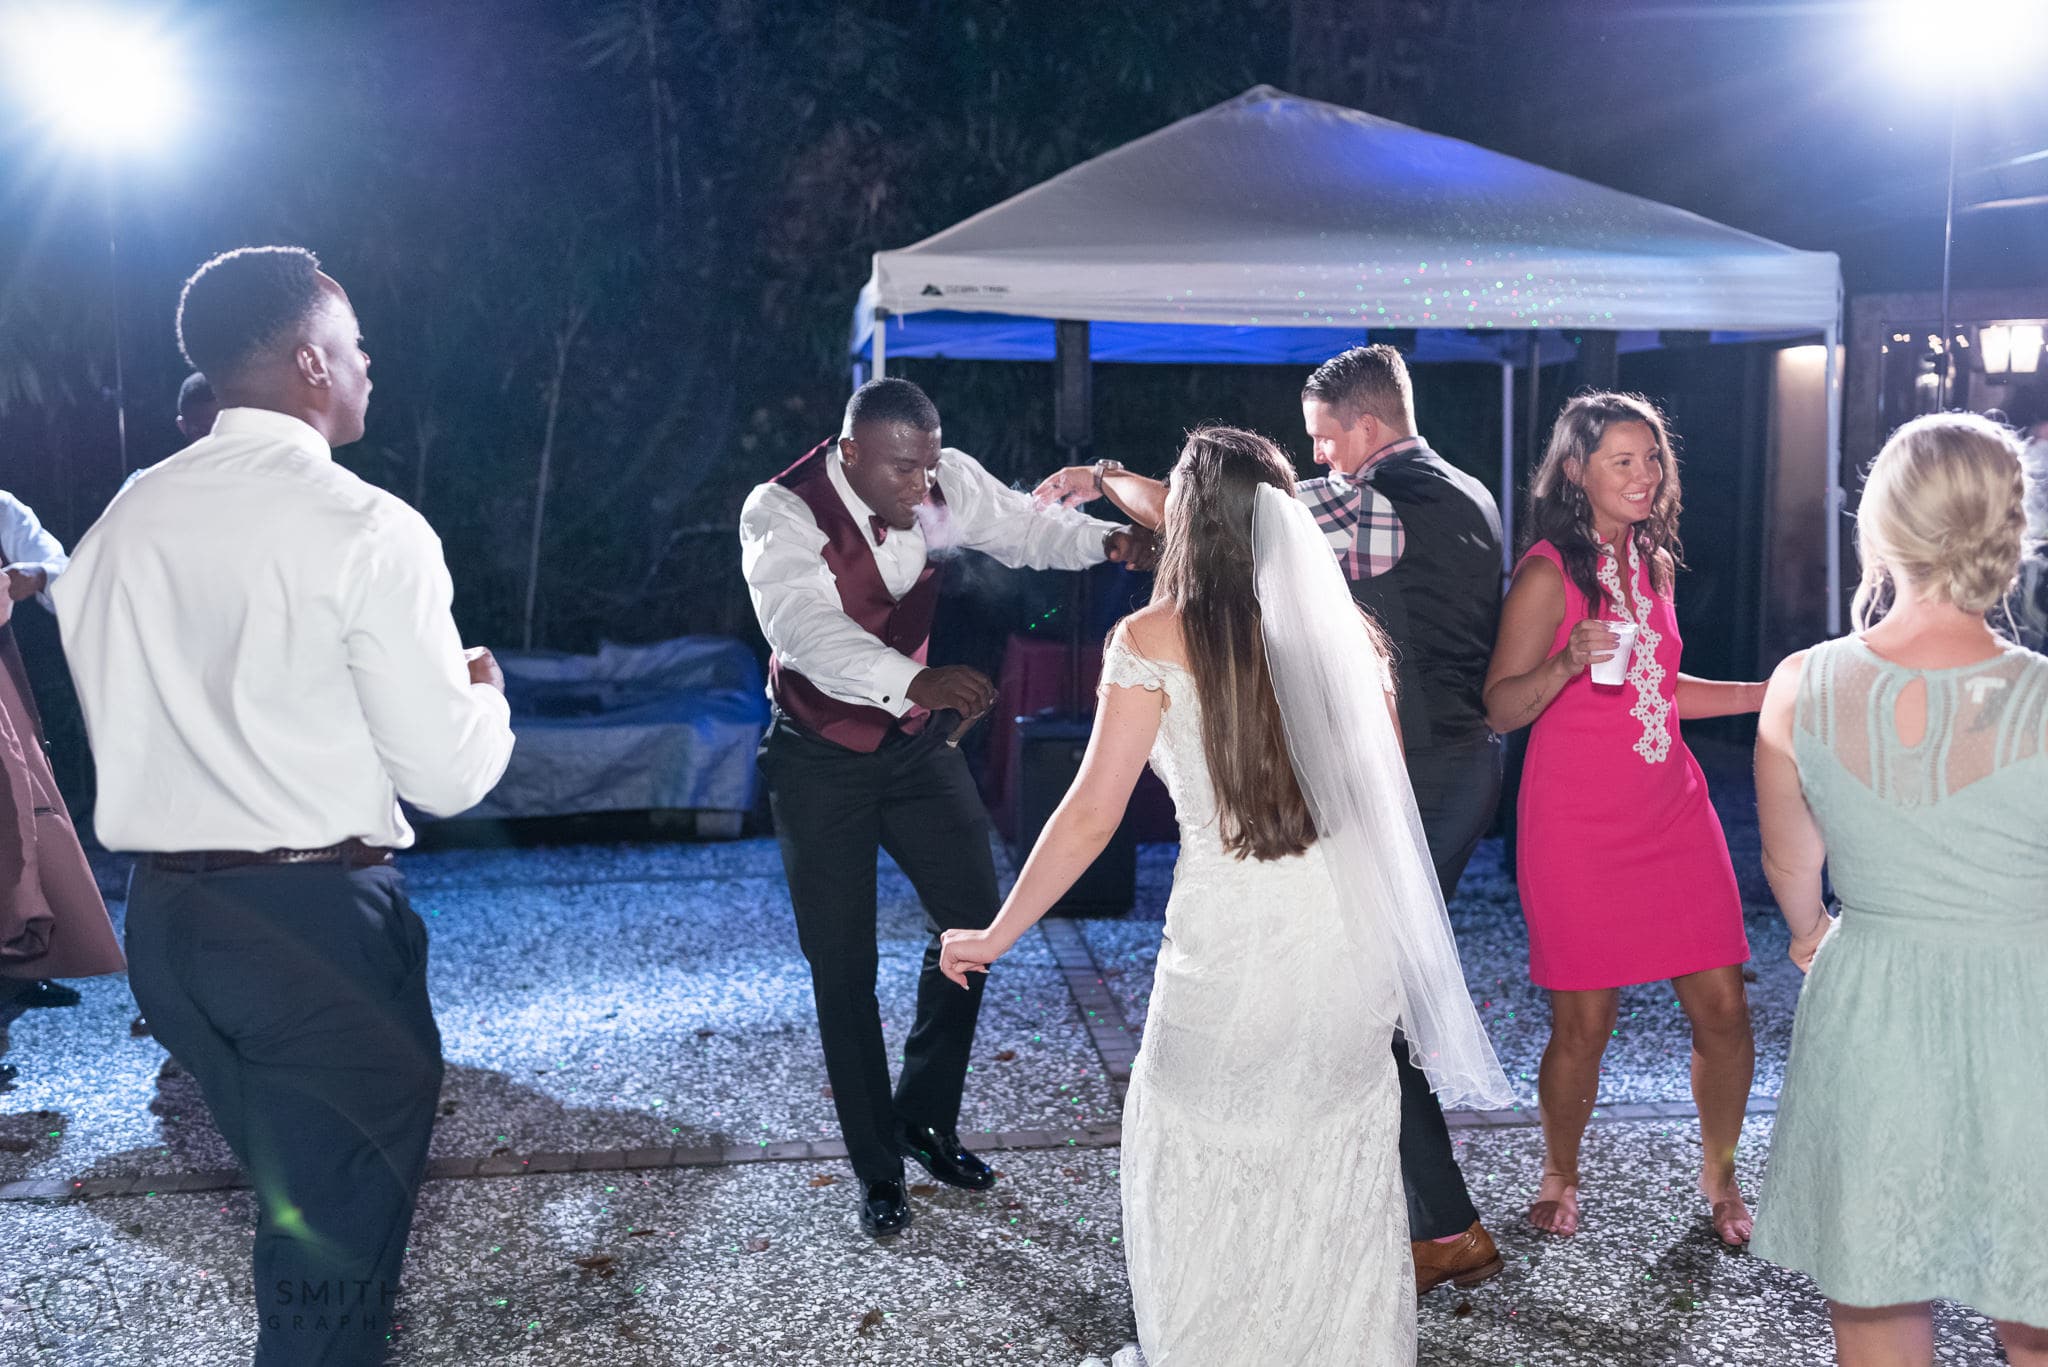 Fun dancing at outdoor reception - Magnolia Plantation - Charleston, SC